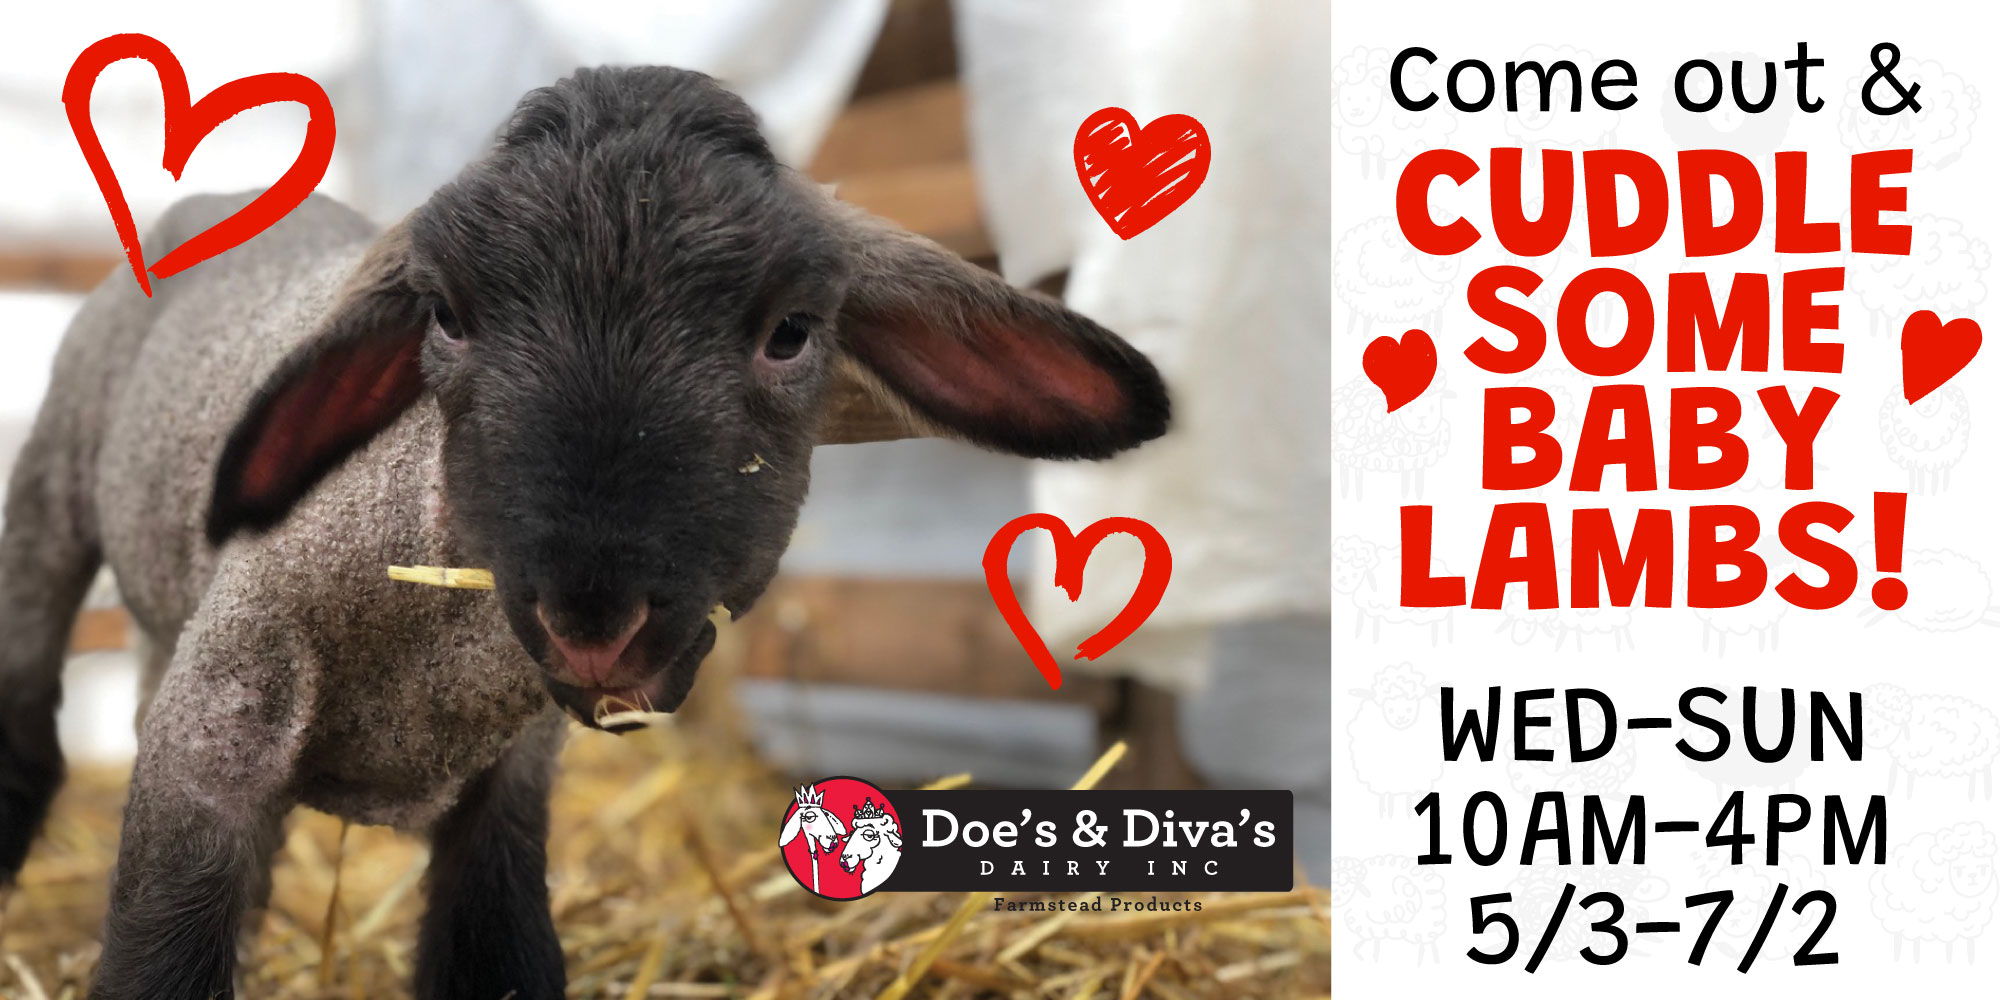 Lamb Cuddles & Open Farm promotional image